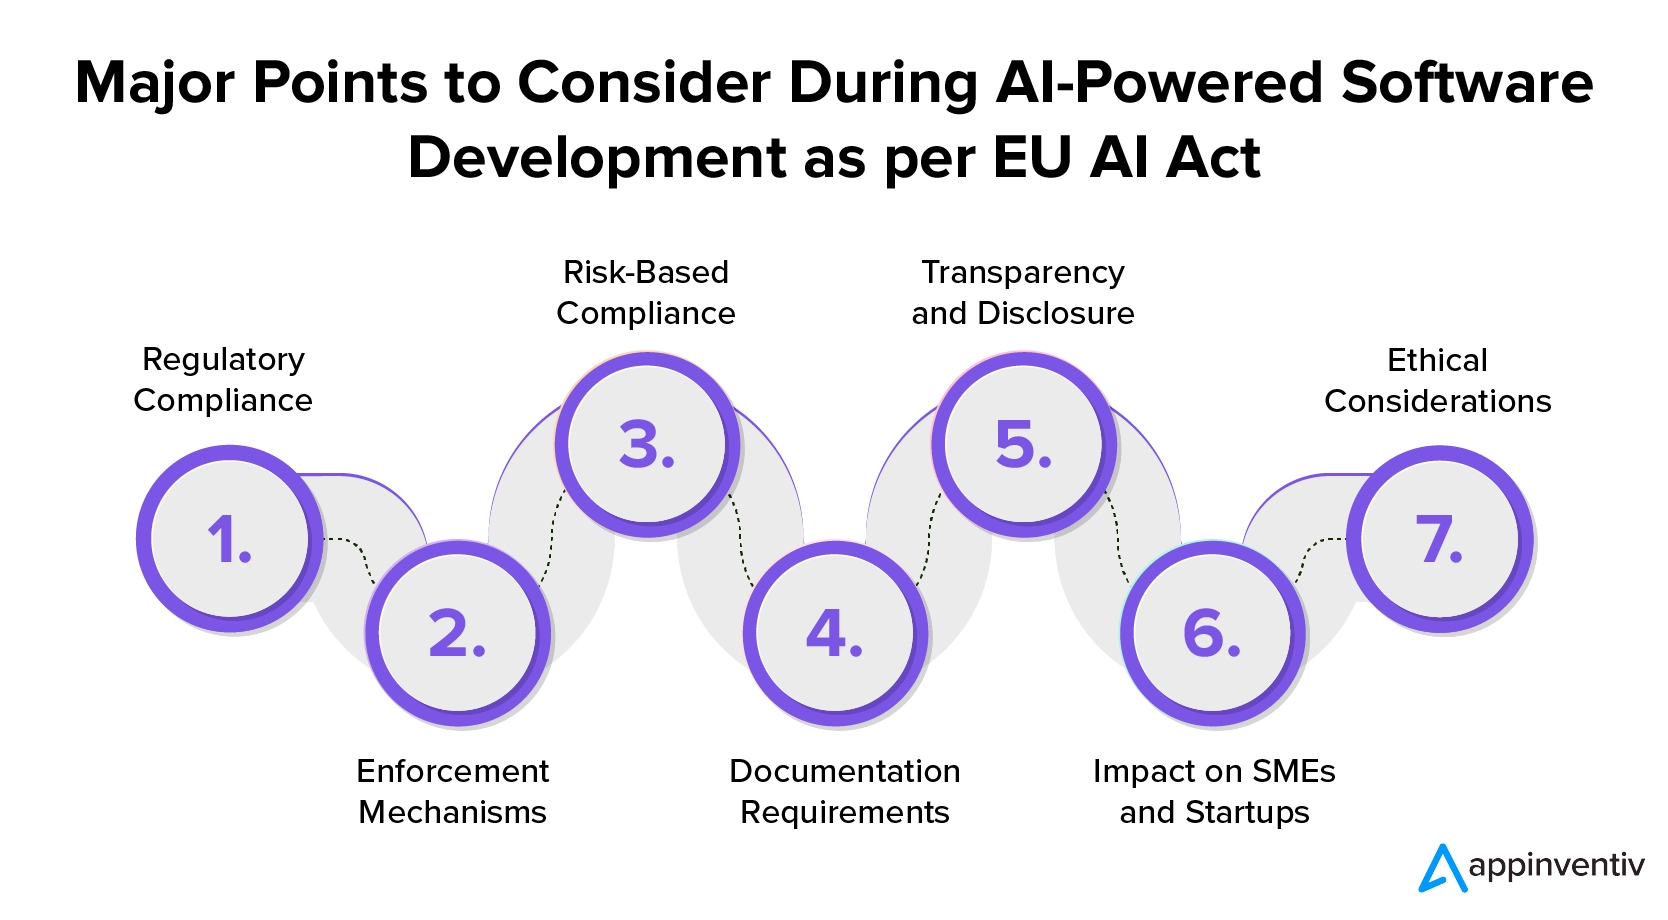 EU AI법에 따라 AI 기반 소프트웨어 개발 중 고려해야 할 주요 사항